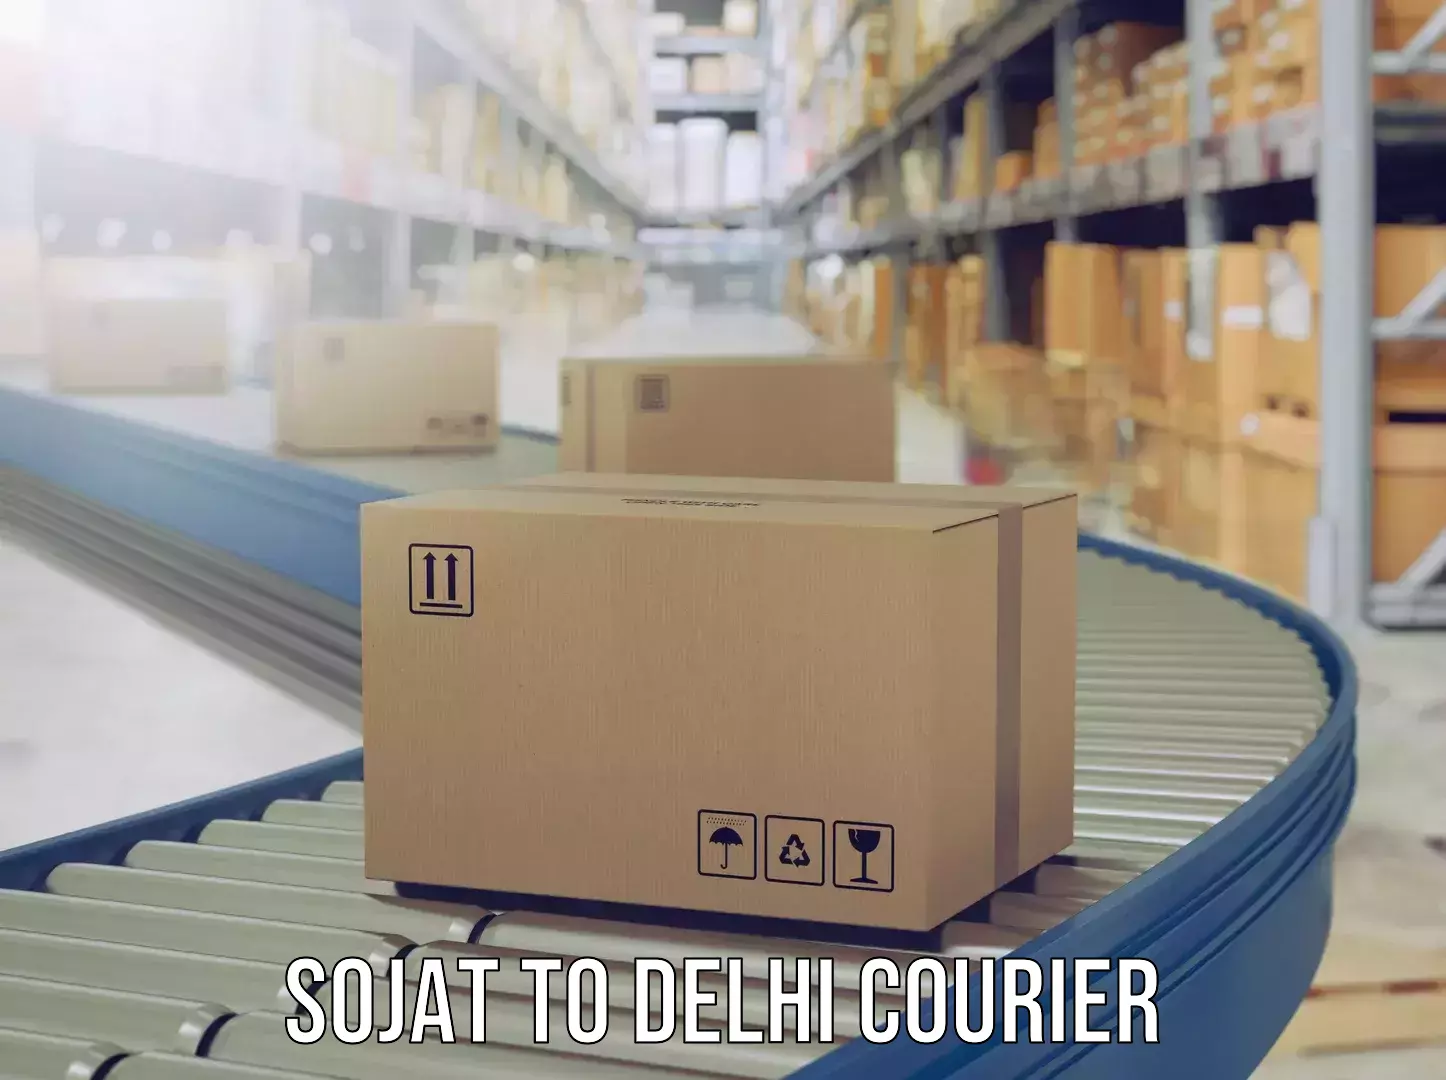 Luggage shipment tracking Sojat to NCR